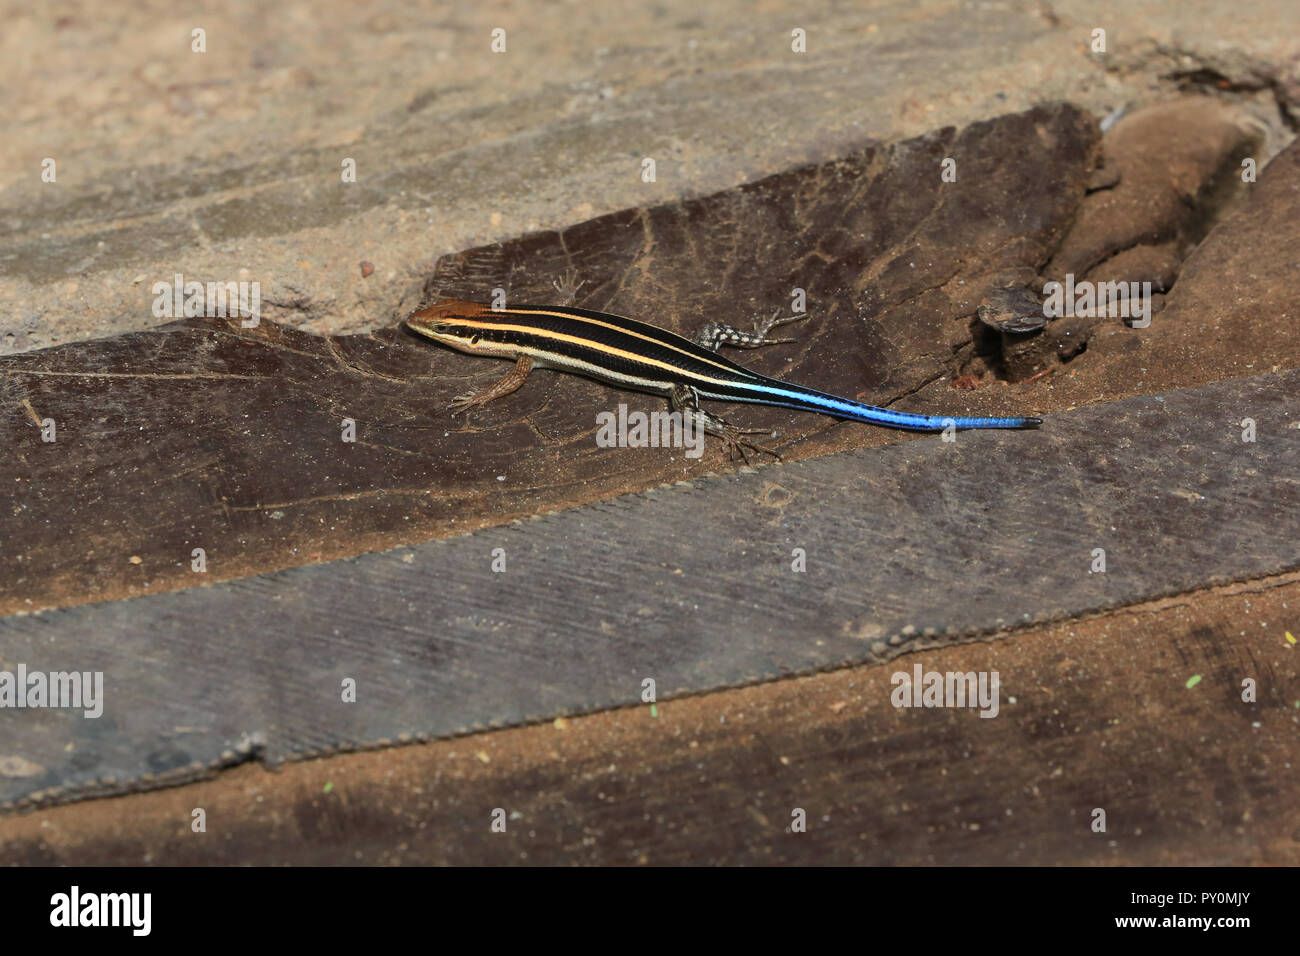 A striped skink lizard at the Sarova Shaba Game Lodge in Shaba National Reserve, Kenya. Stock Photo